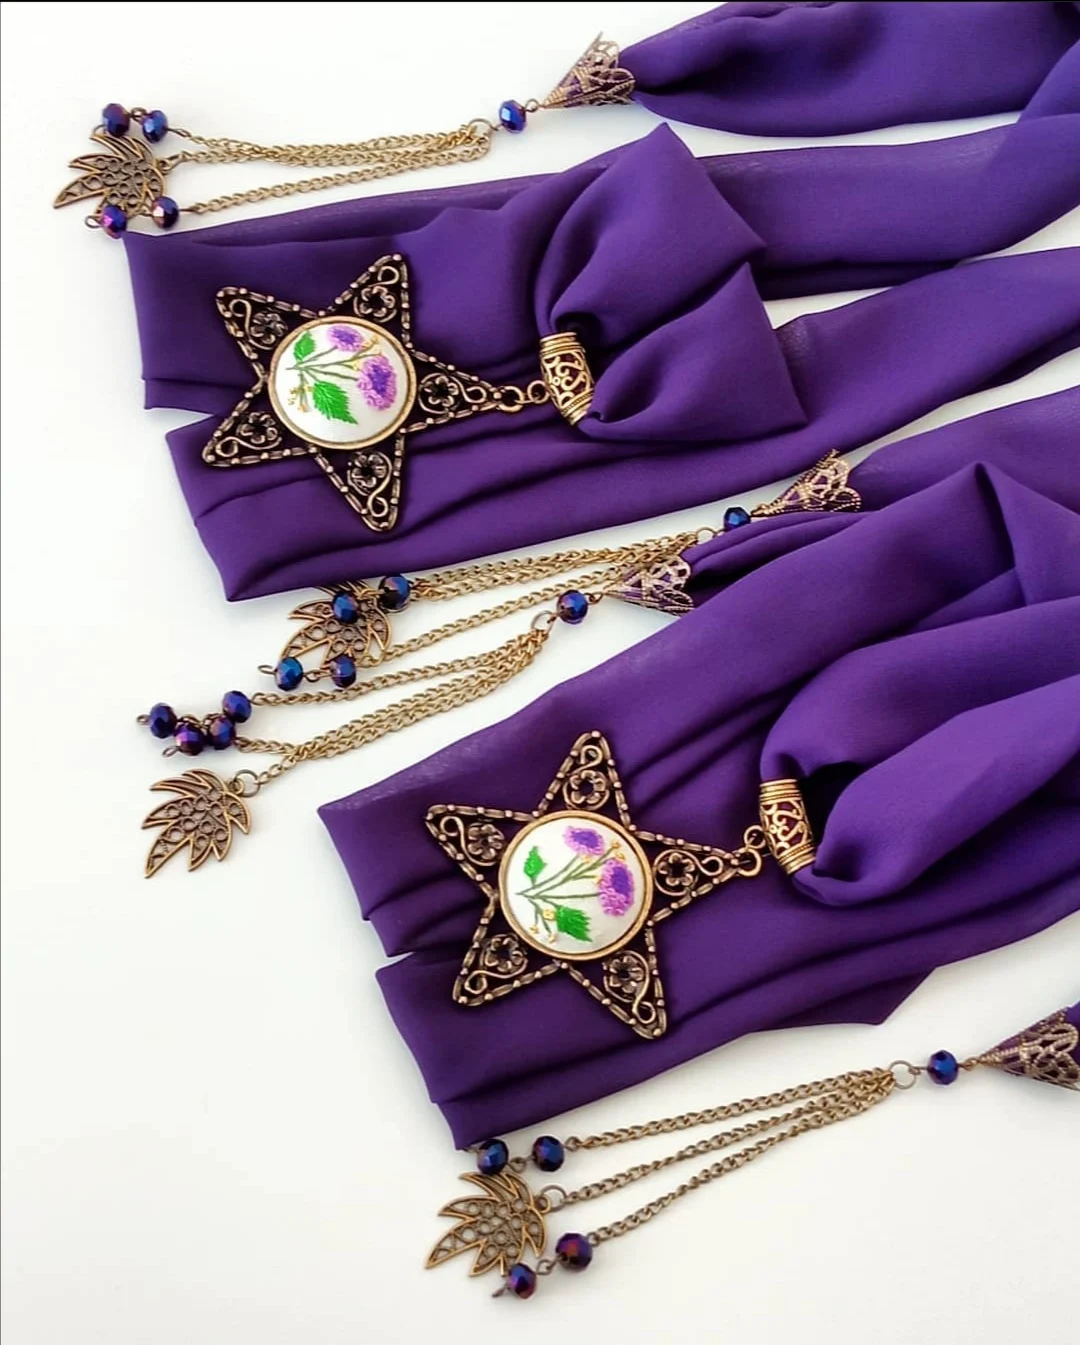 

Scarf Jewelry Accessories Handmade Elegant Stylish Design For Woman Custom Impressive Attractive Quality Purple Ambitious Crepe Fabric Antique Look